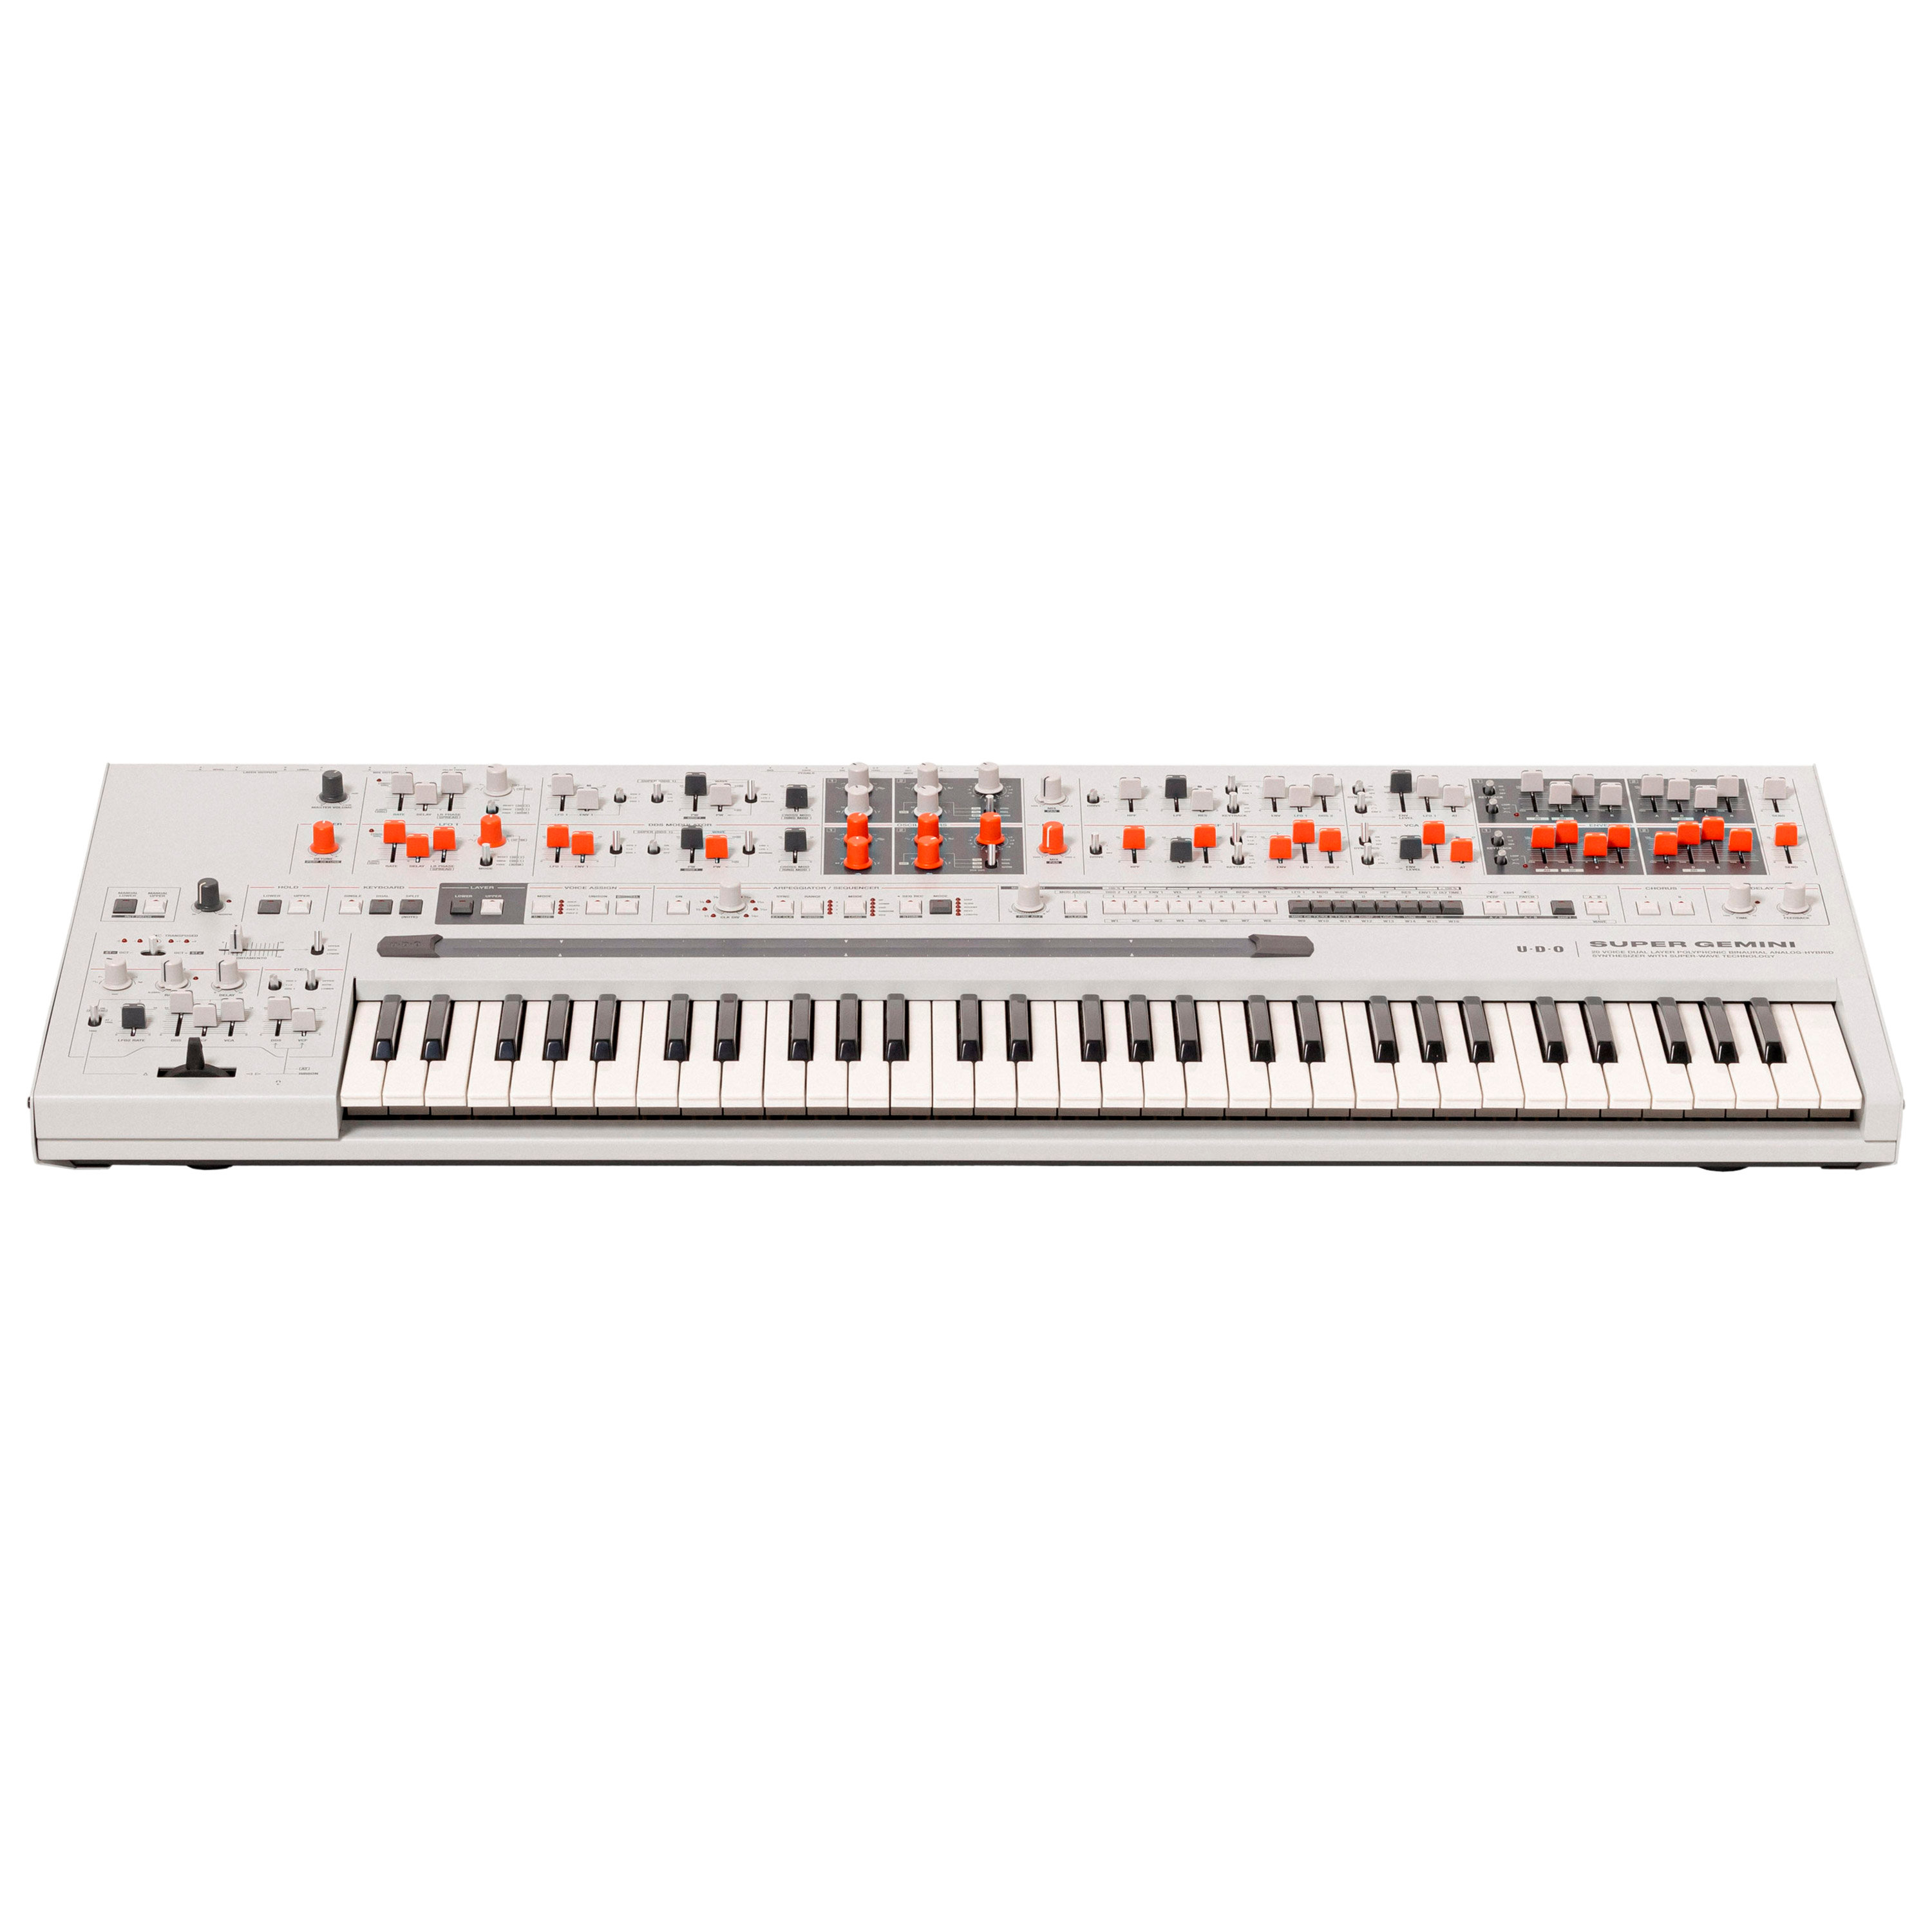 UDO Audio Super Gemini Keyboard White